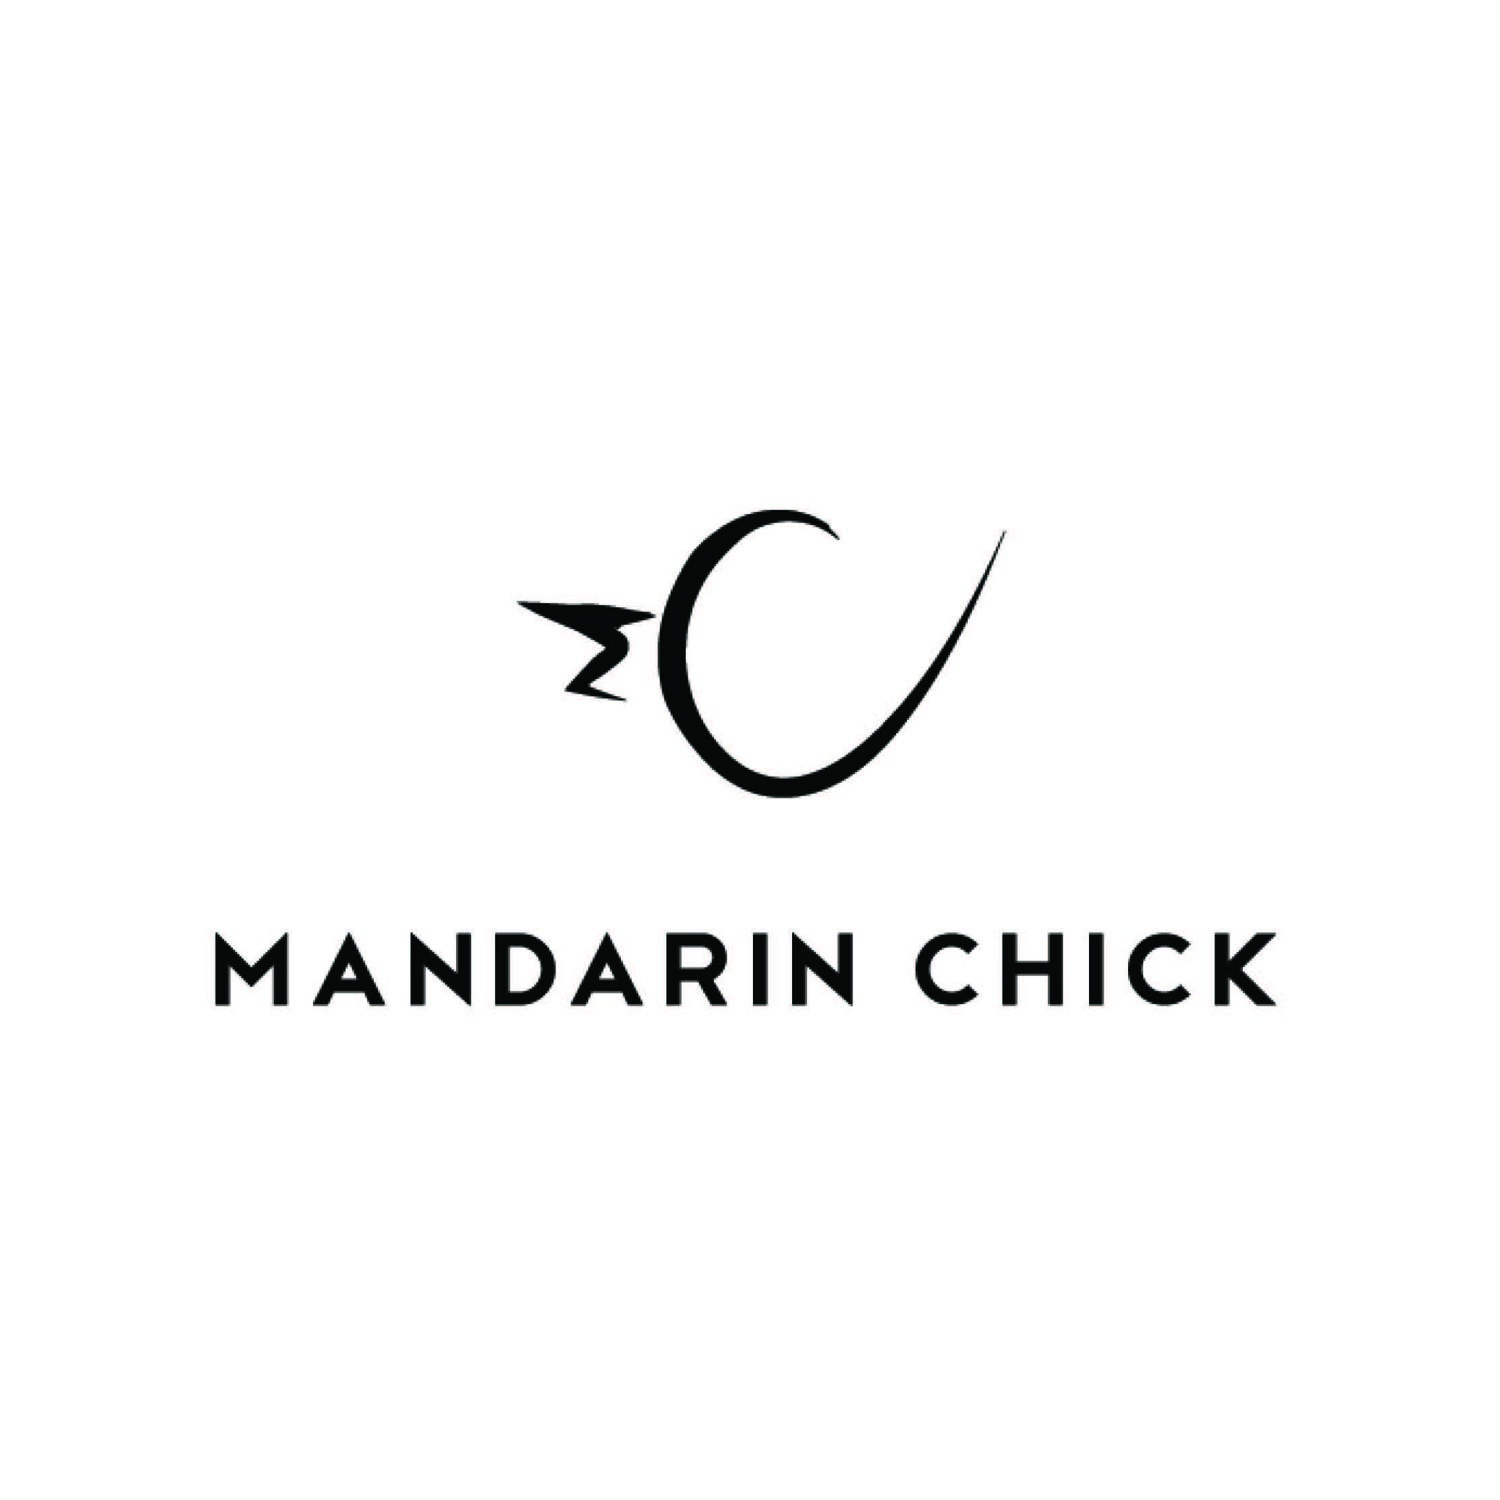 Mandarin Chick